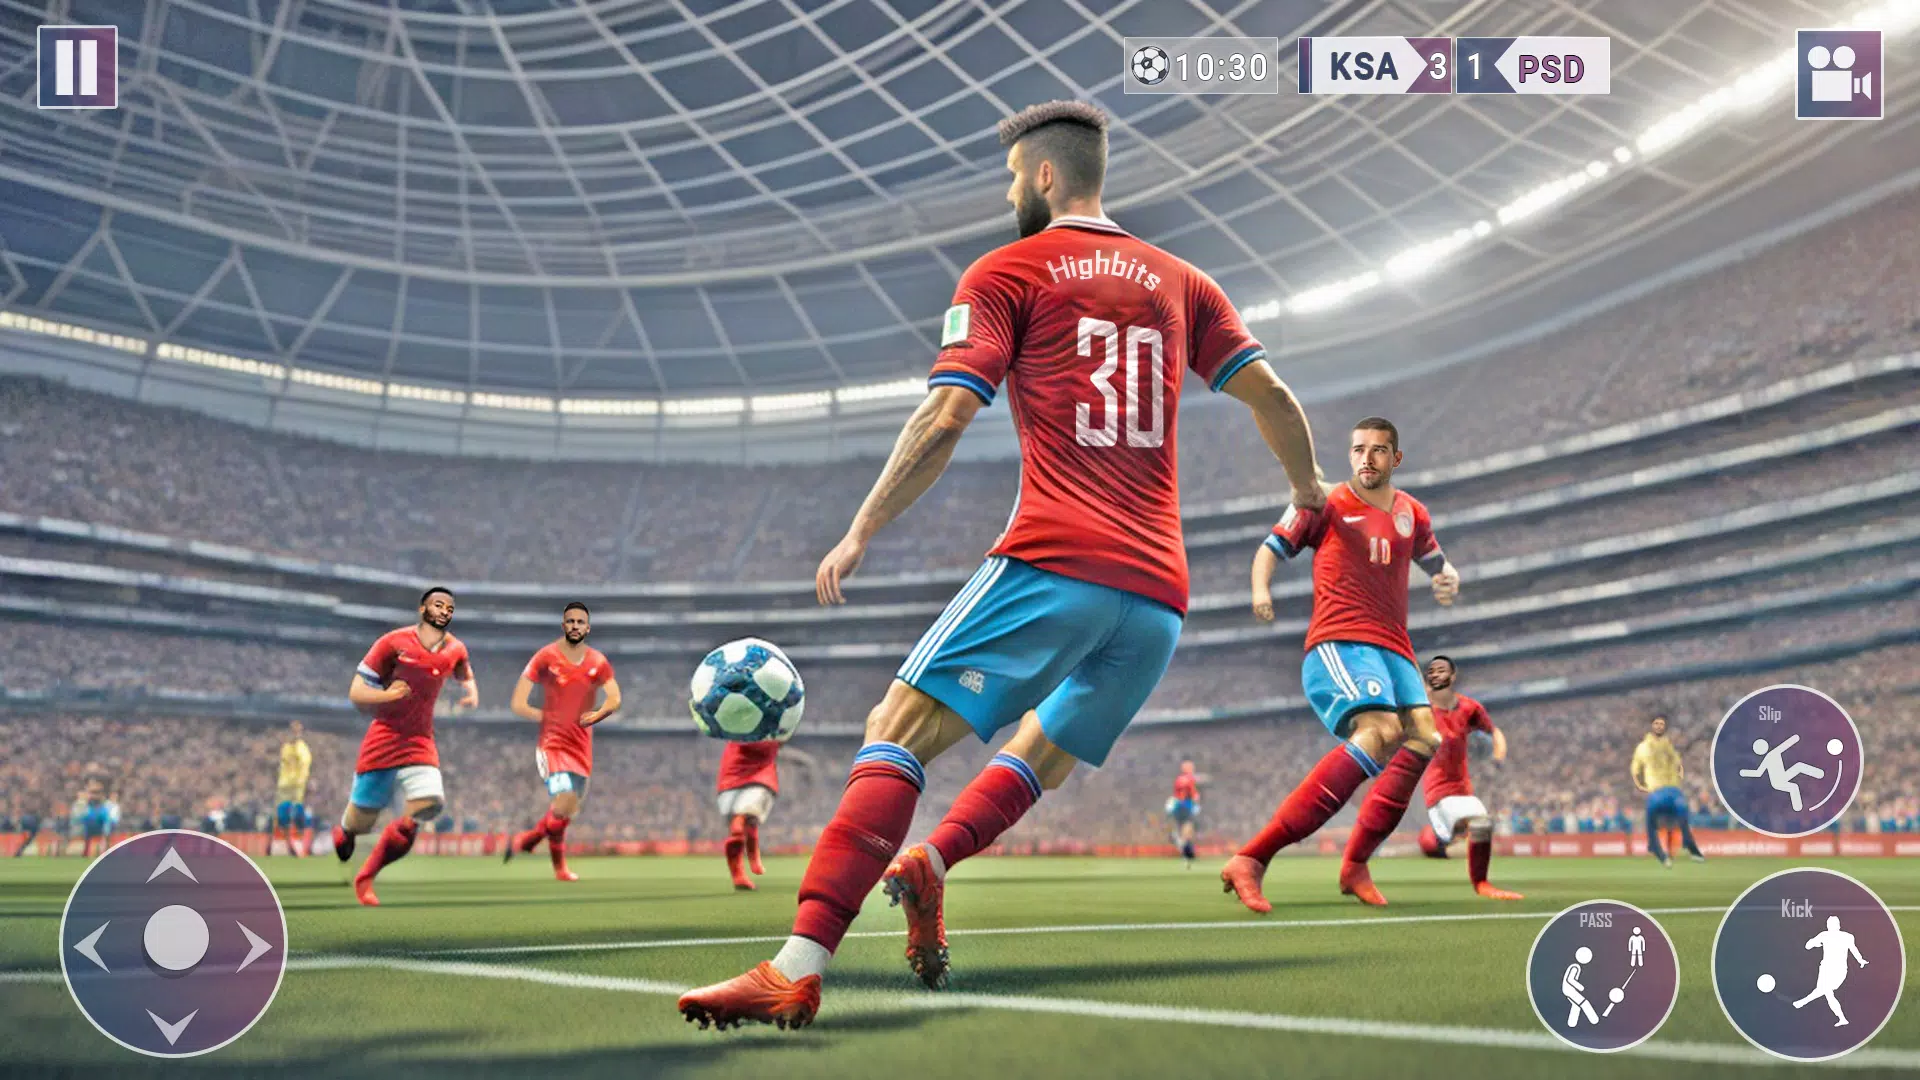 Soccer Star 2023 Super Football APK v1.13.0 Free Download - APK4Fun